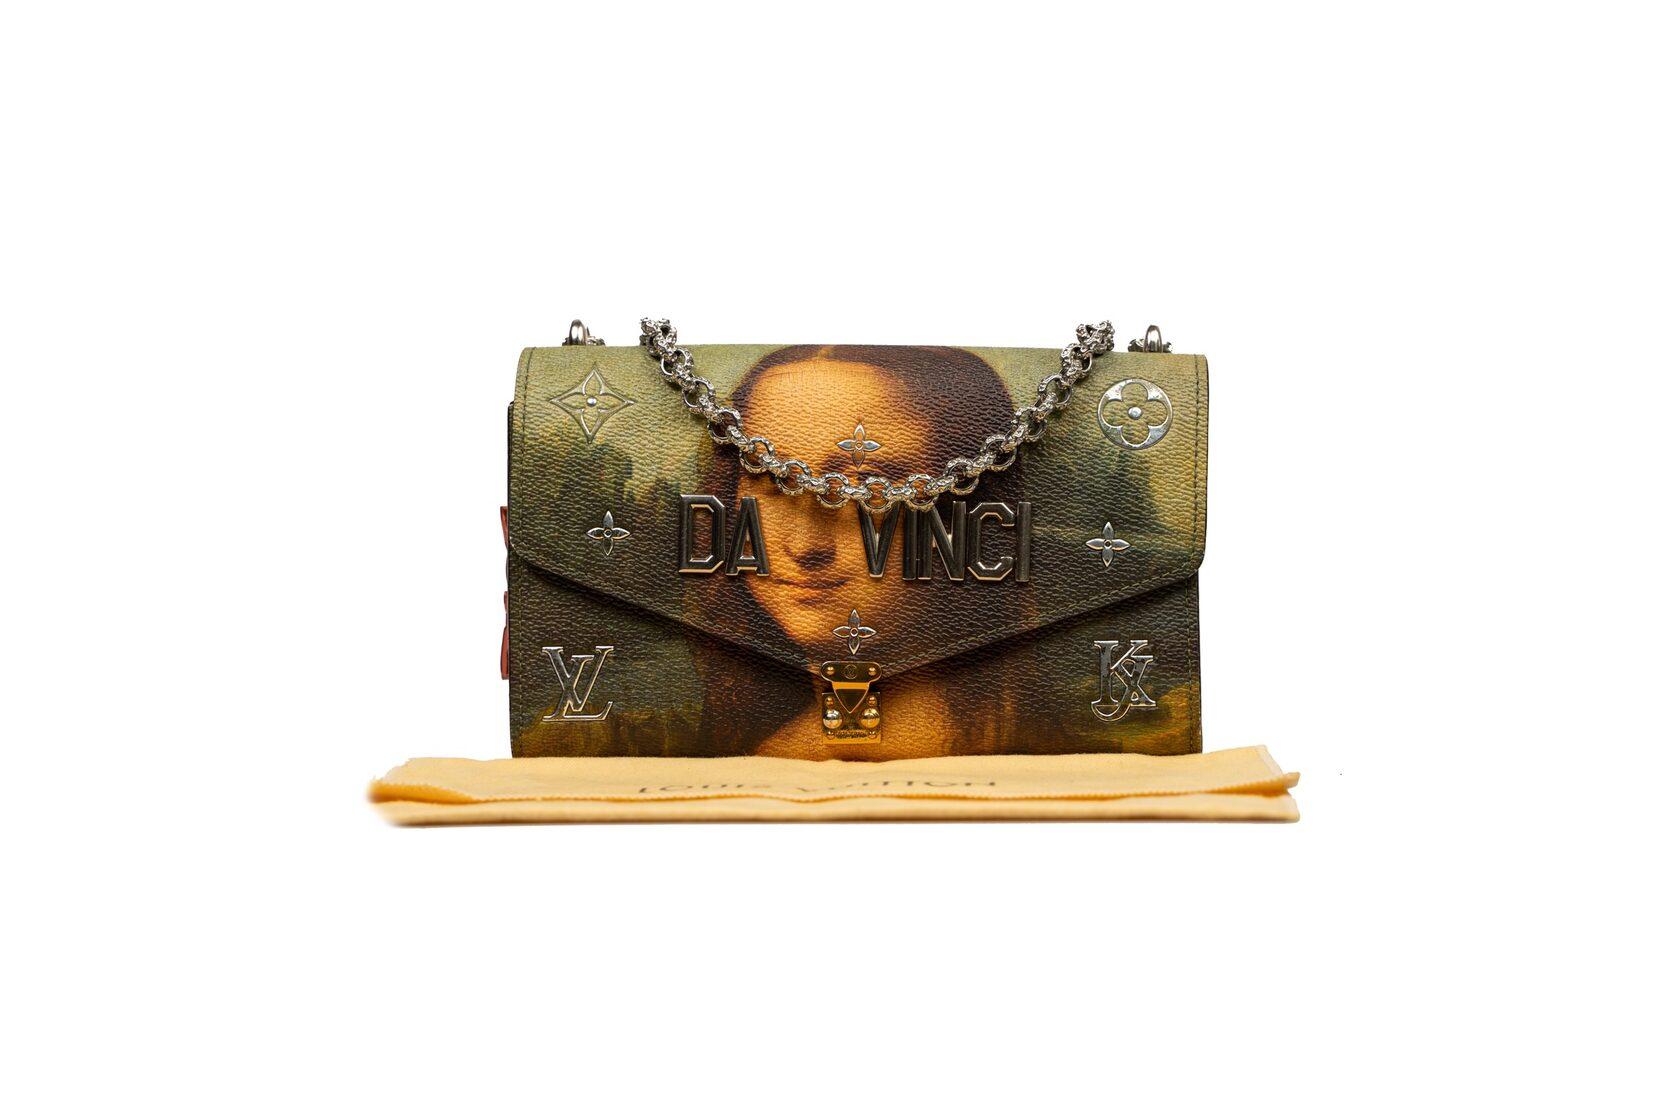 Louis Vuitton Chain Bag Limited Edition with designer Jeff Coons - Da Vinci For Sale 10